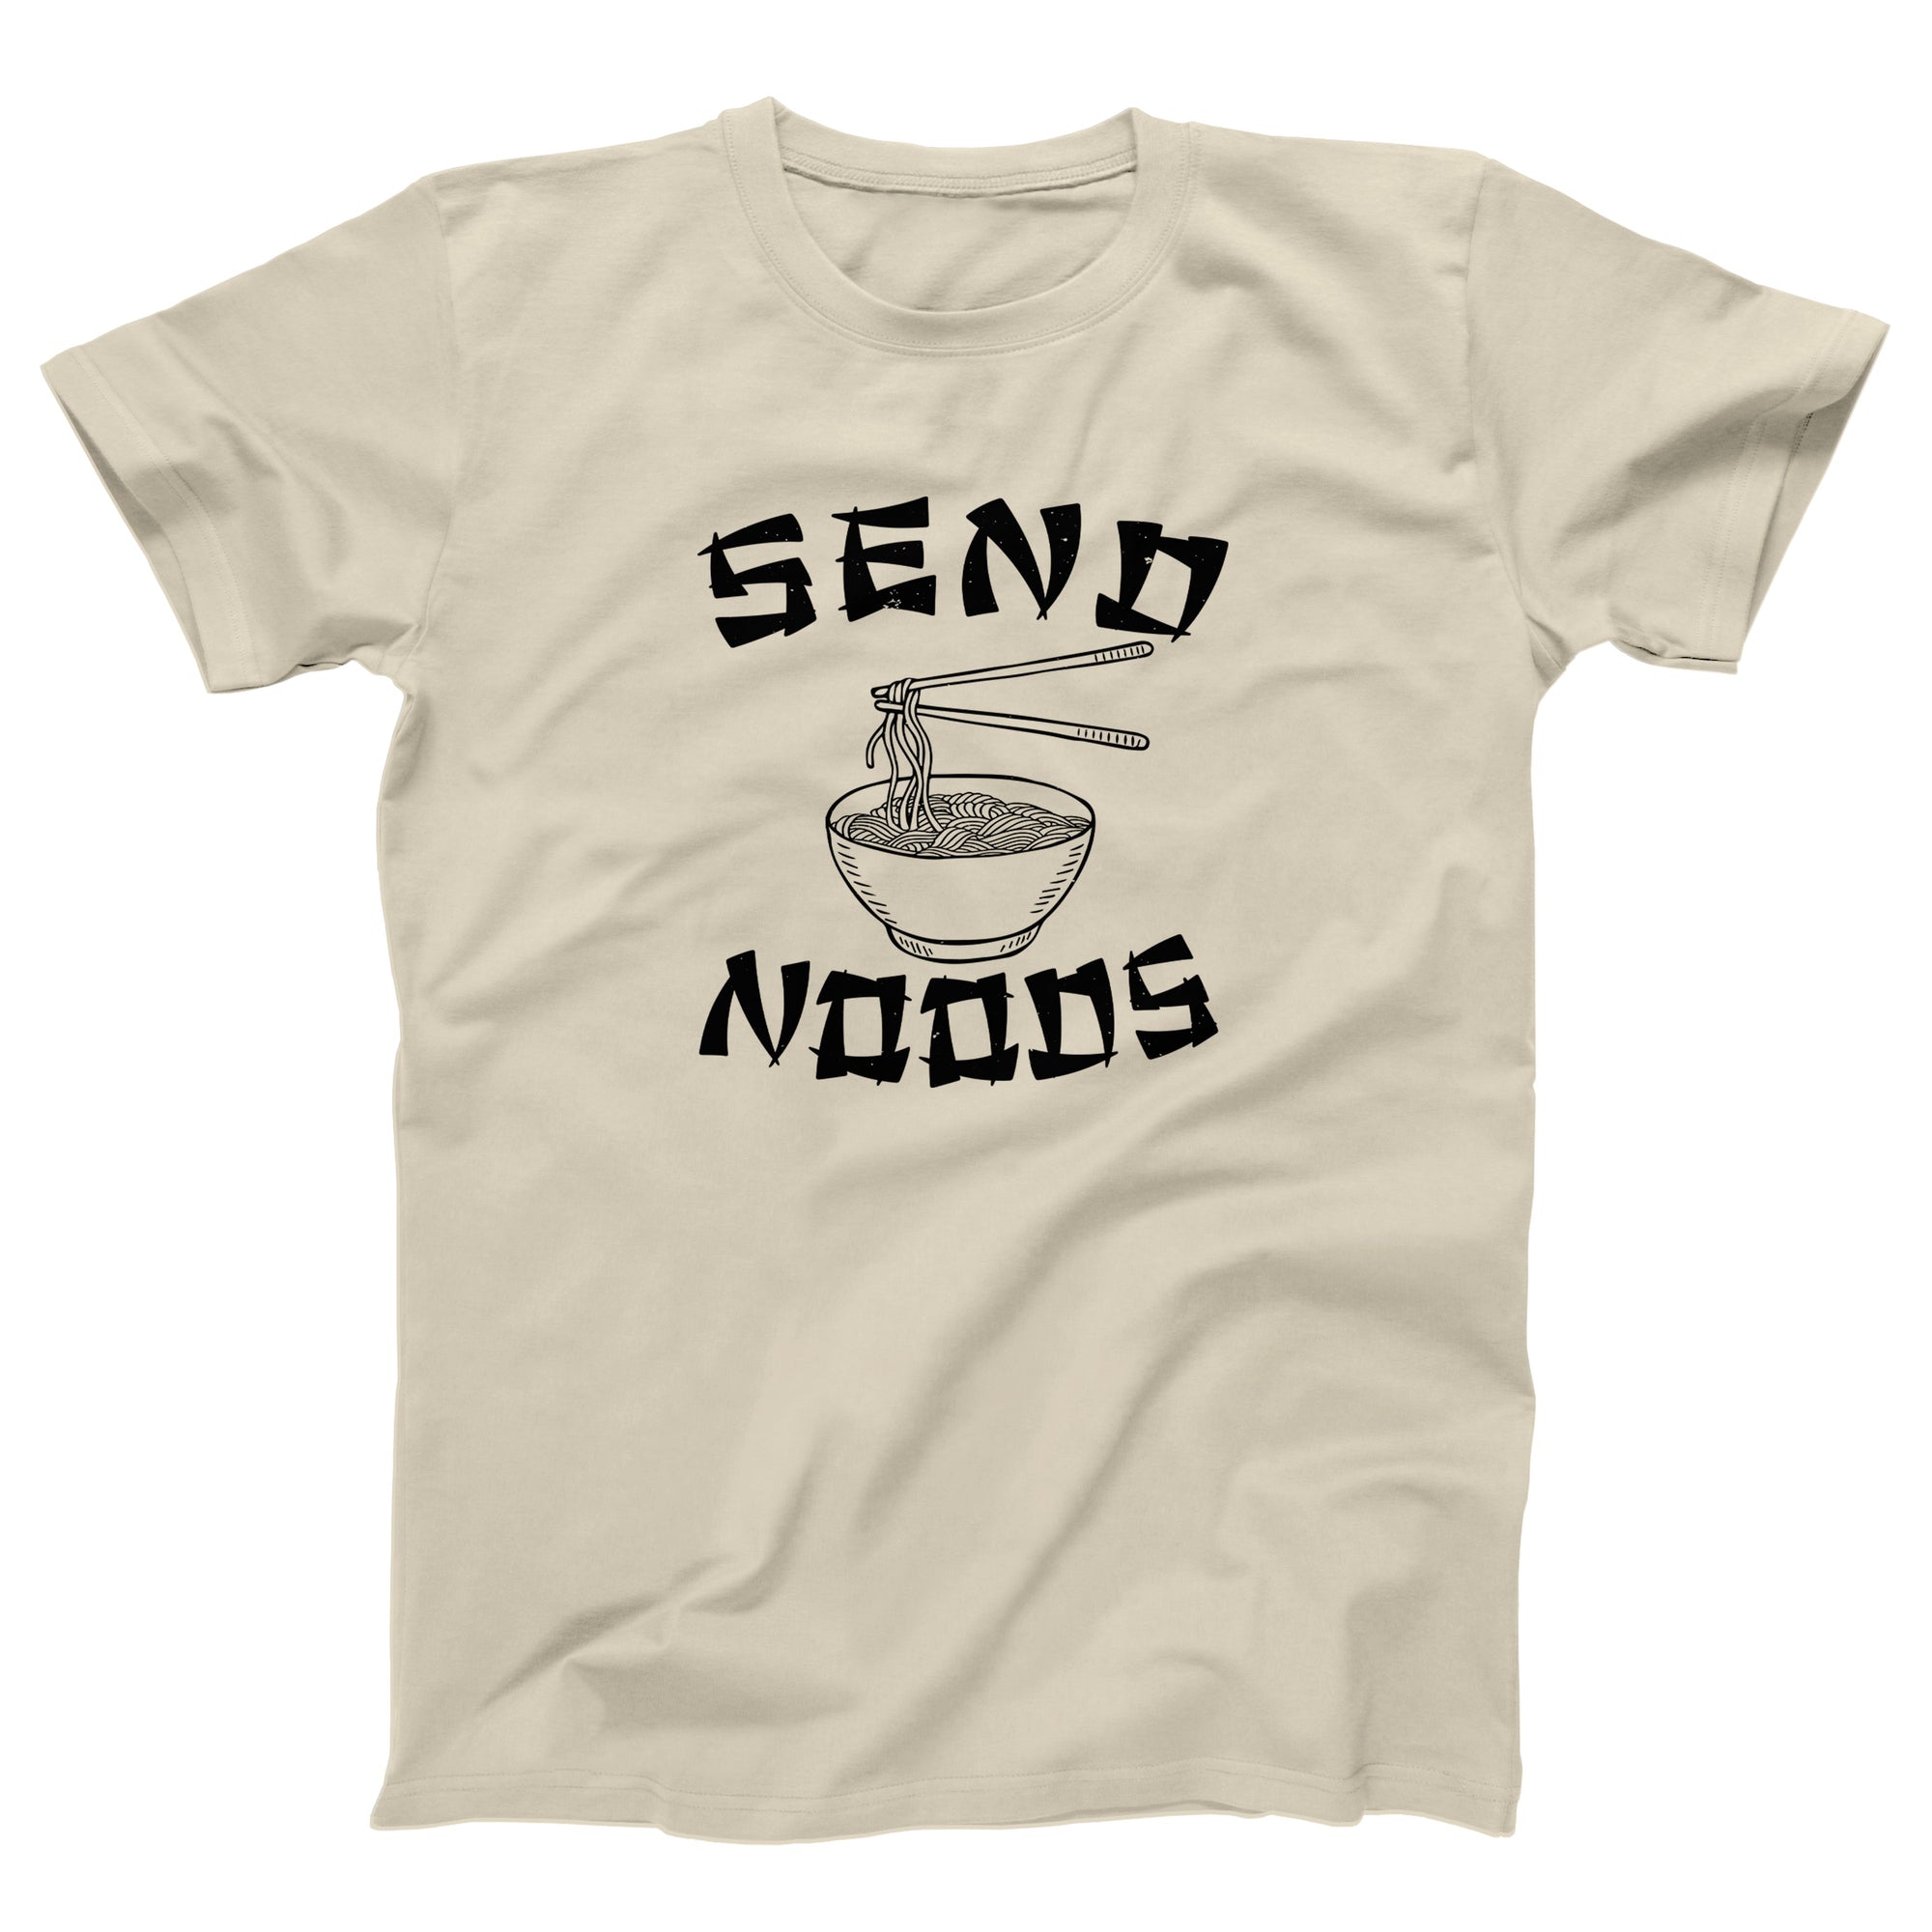 Send Noods Adult Unisex T-Shirt - marionmartigny